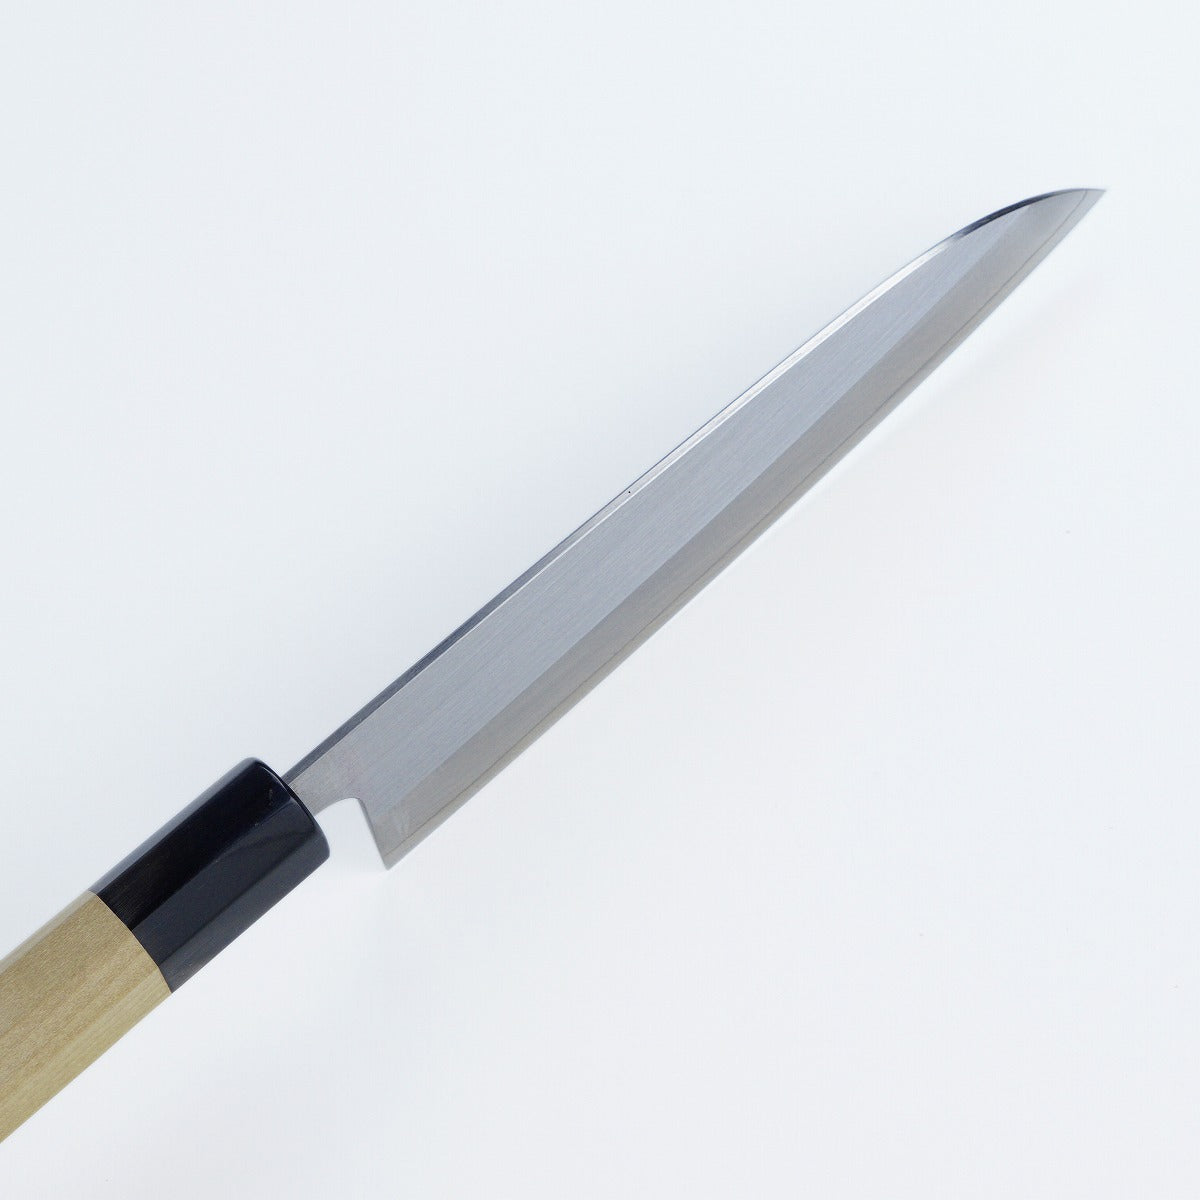 Santoku (Multi-Purpose Knife) Powdered HSS with Buffalo Horn Octagonal Handle, 165mm